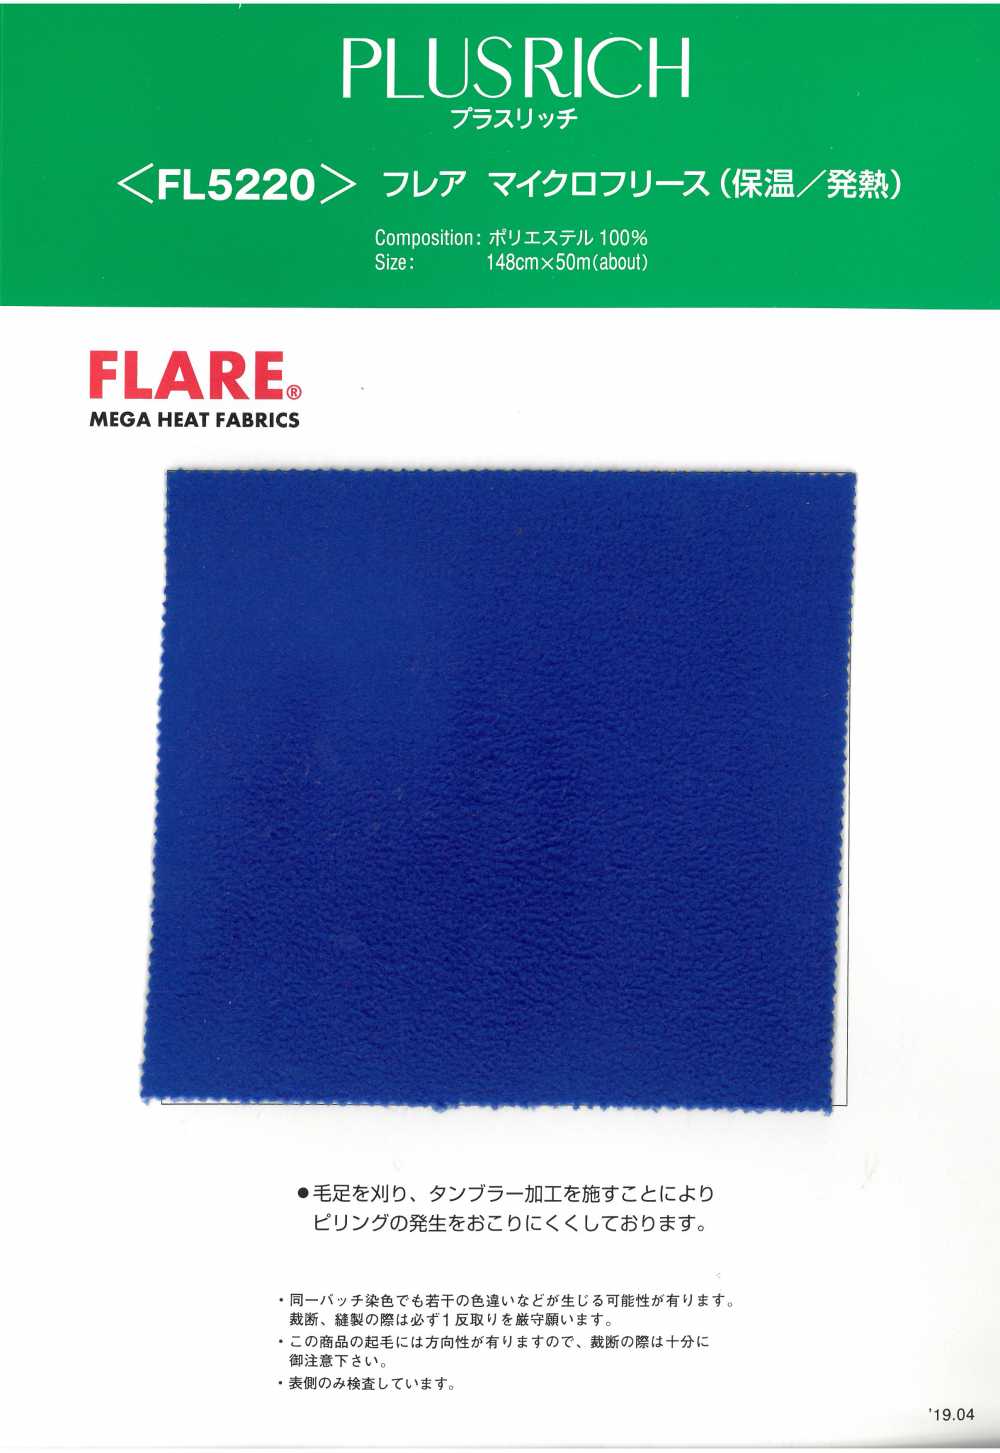 FL5220 FLARE® Micro Fleece (Calor / Calor)[Fabrica Textil]